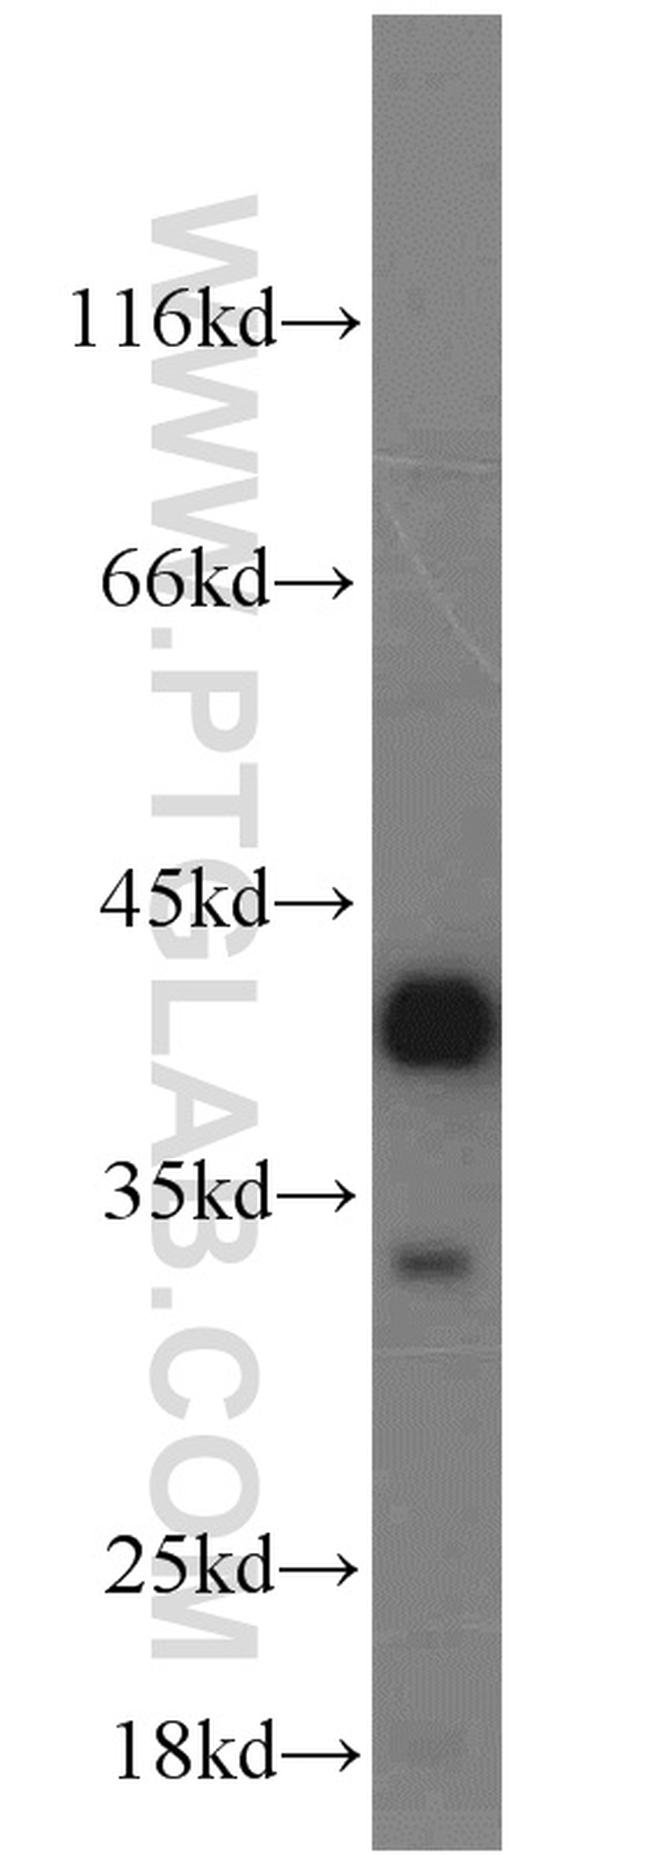 Syntaxin 12 Antibody in Western Blot (WB)